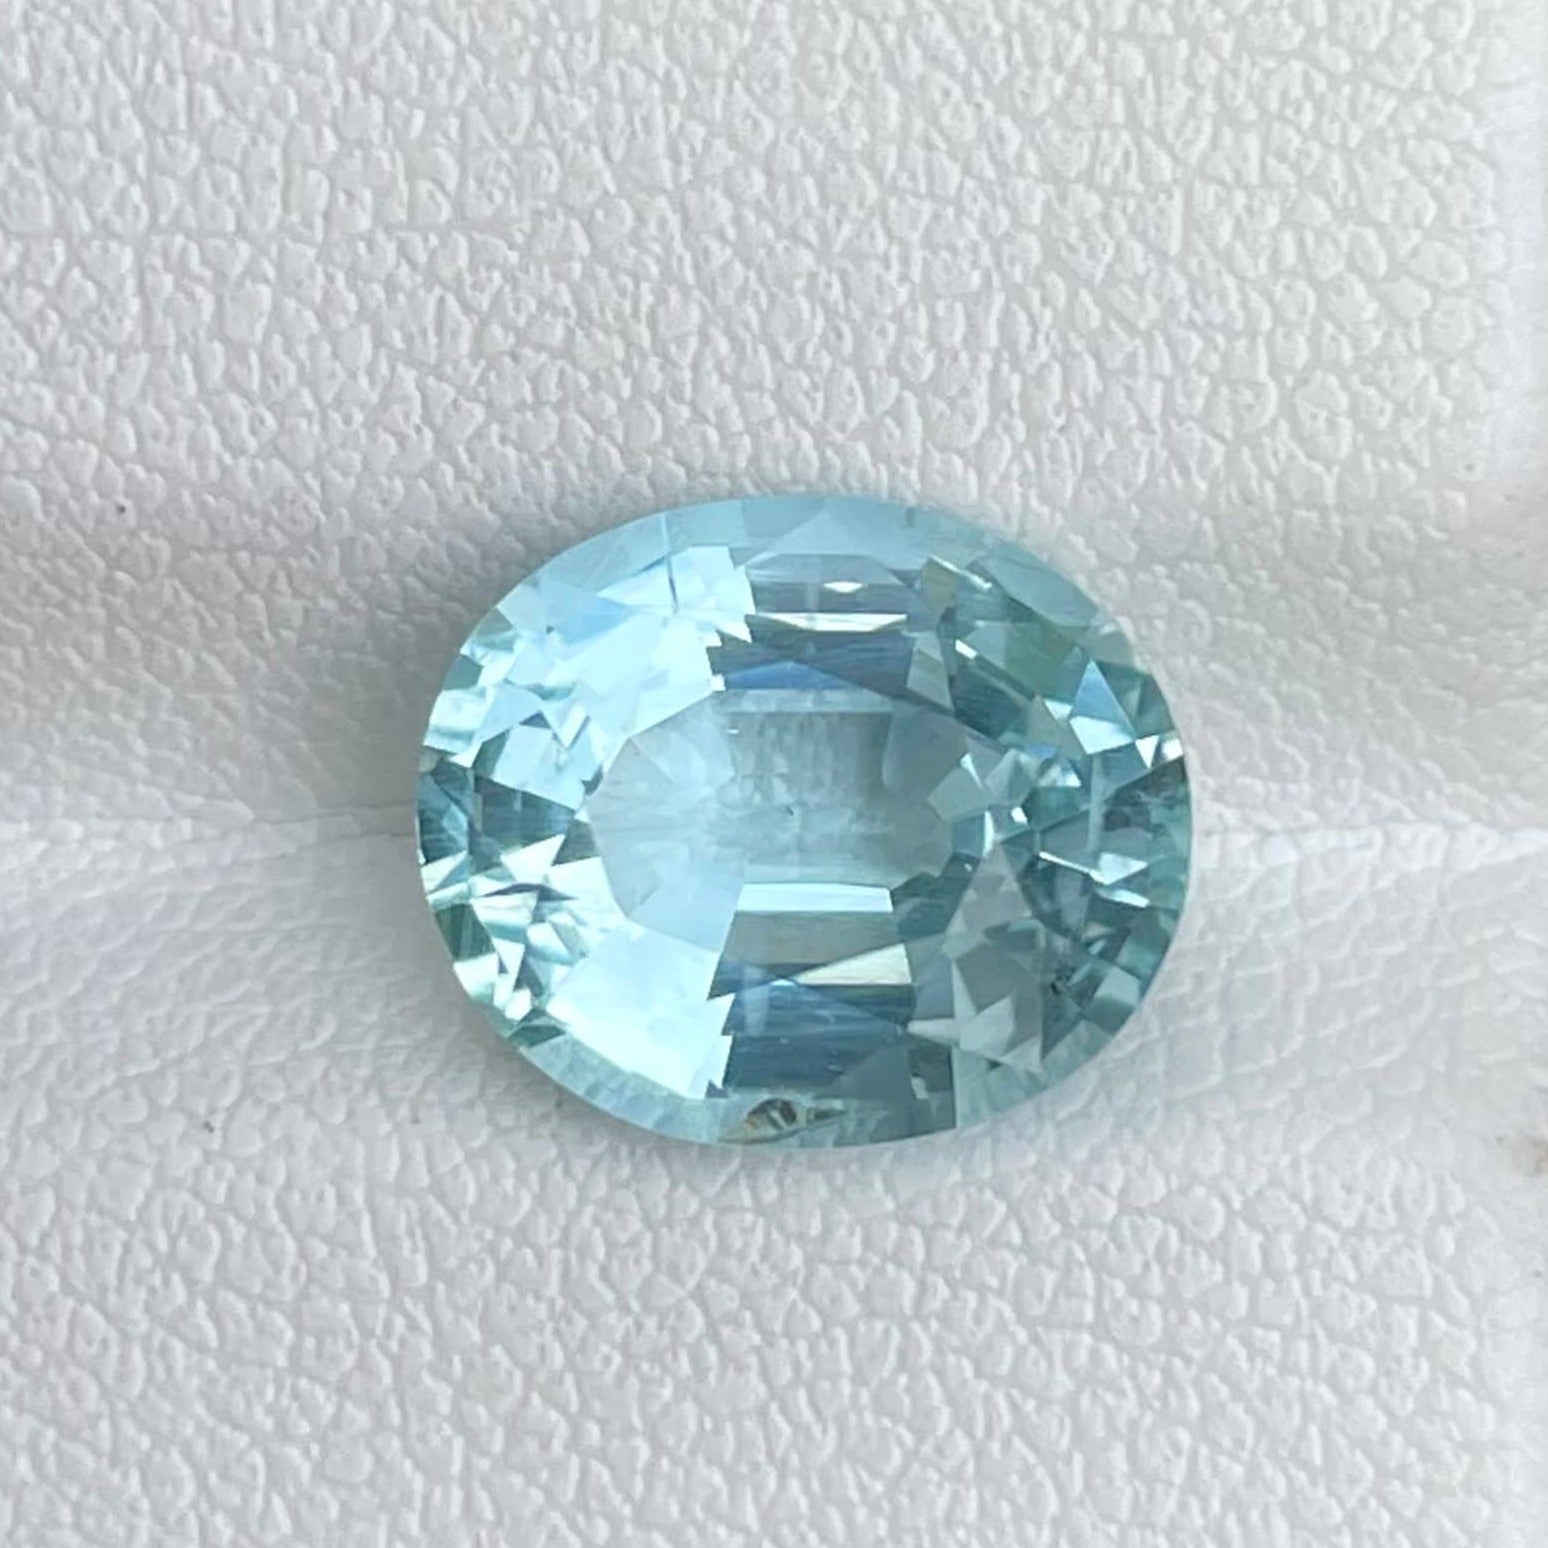 3.85 Carats Gem Blue Aquamarine Stone